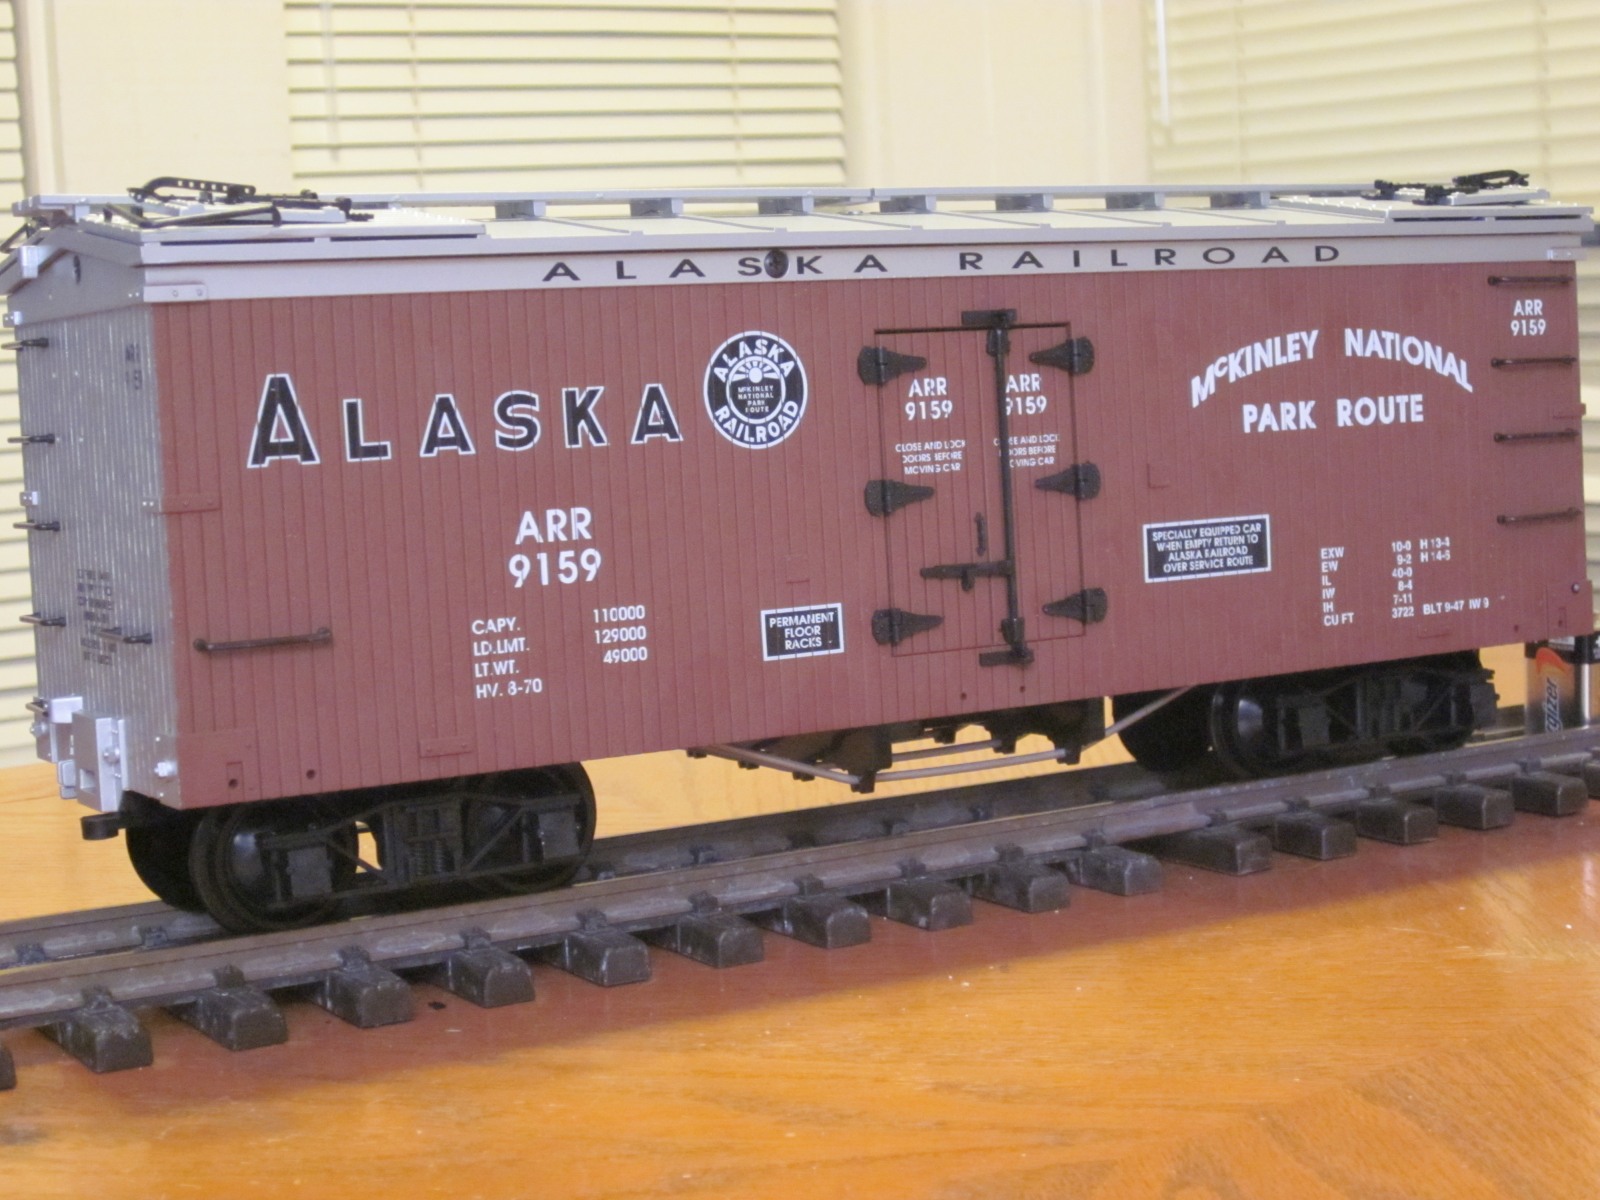 R16204B Alaska RR (Brown Silver) ARR 9159